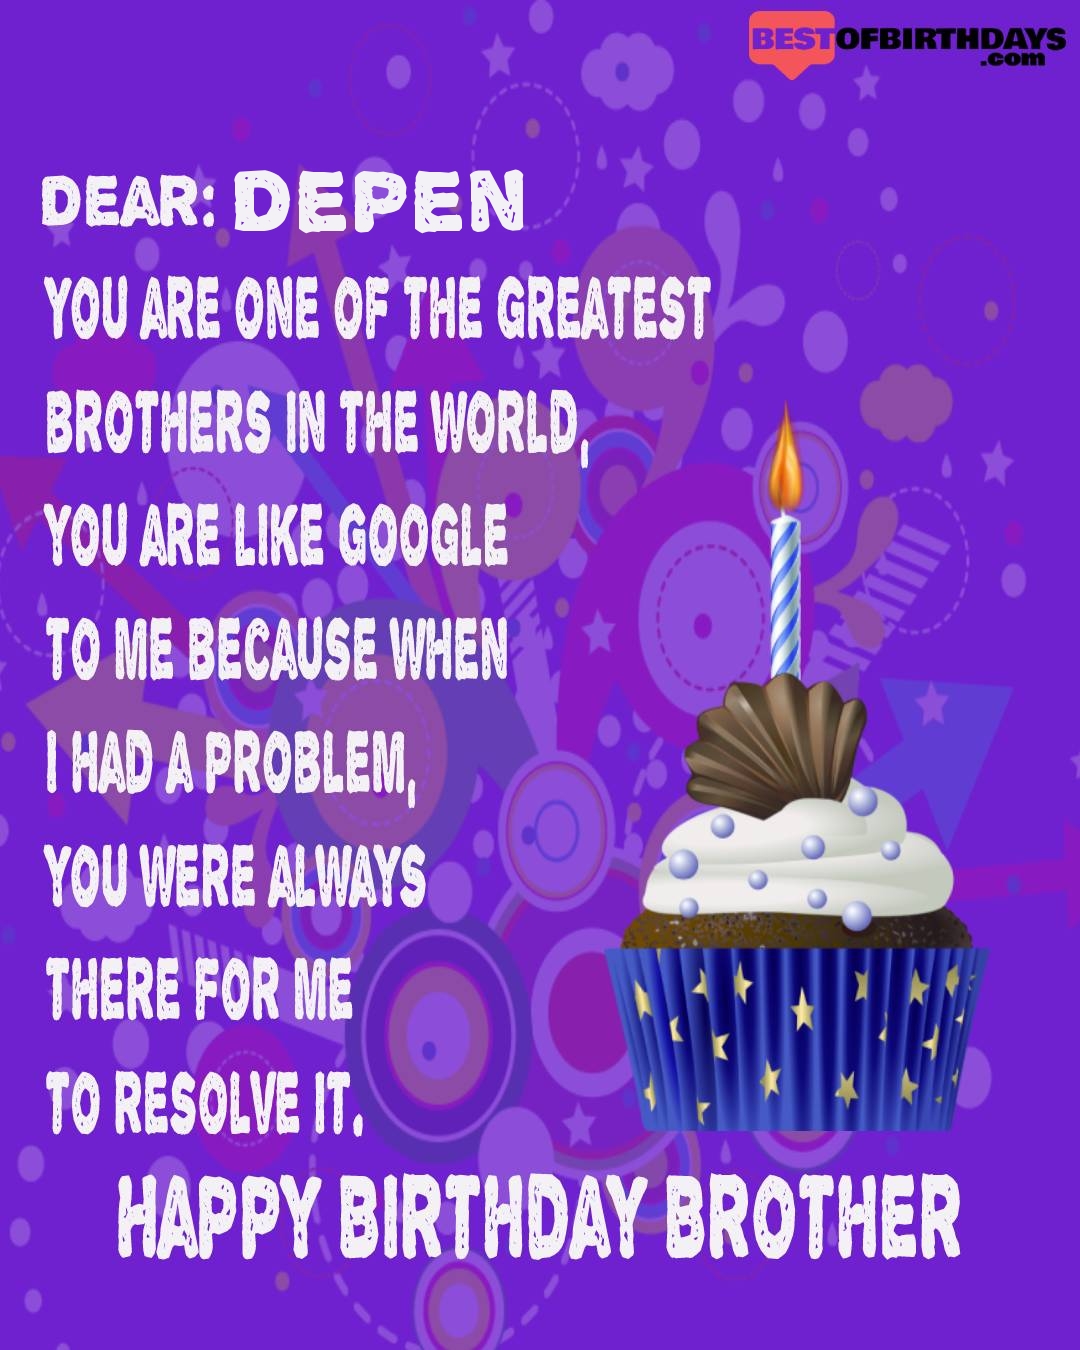 Happy birthday depen bhai brother bro